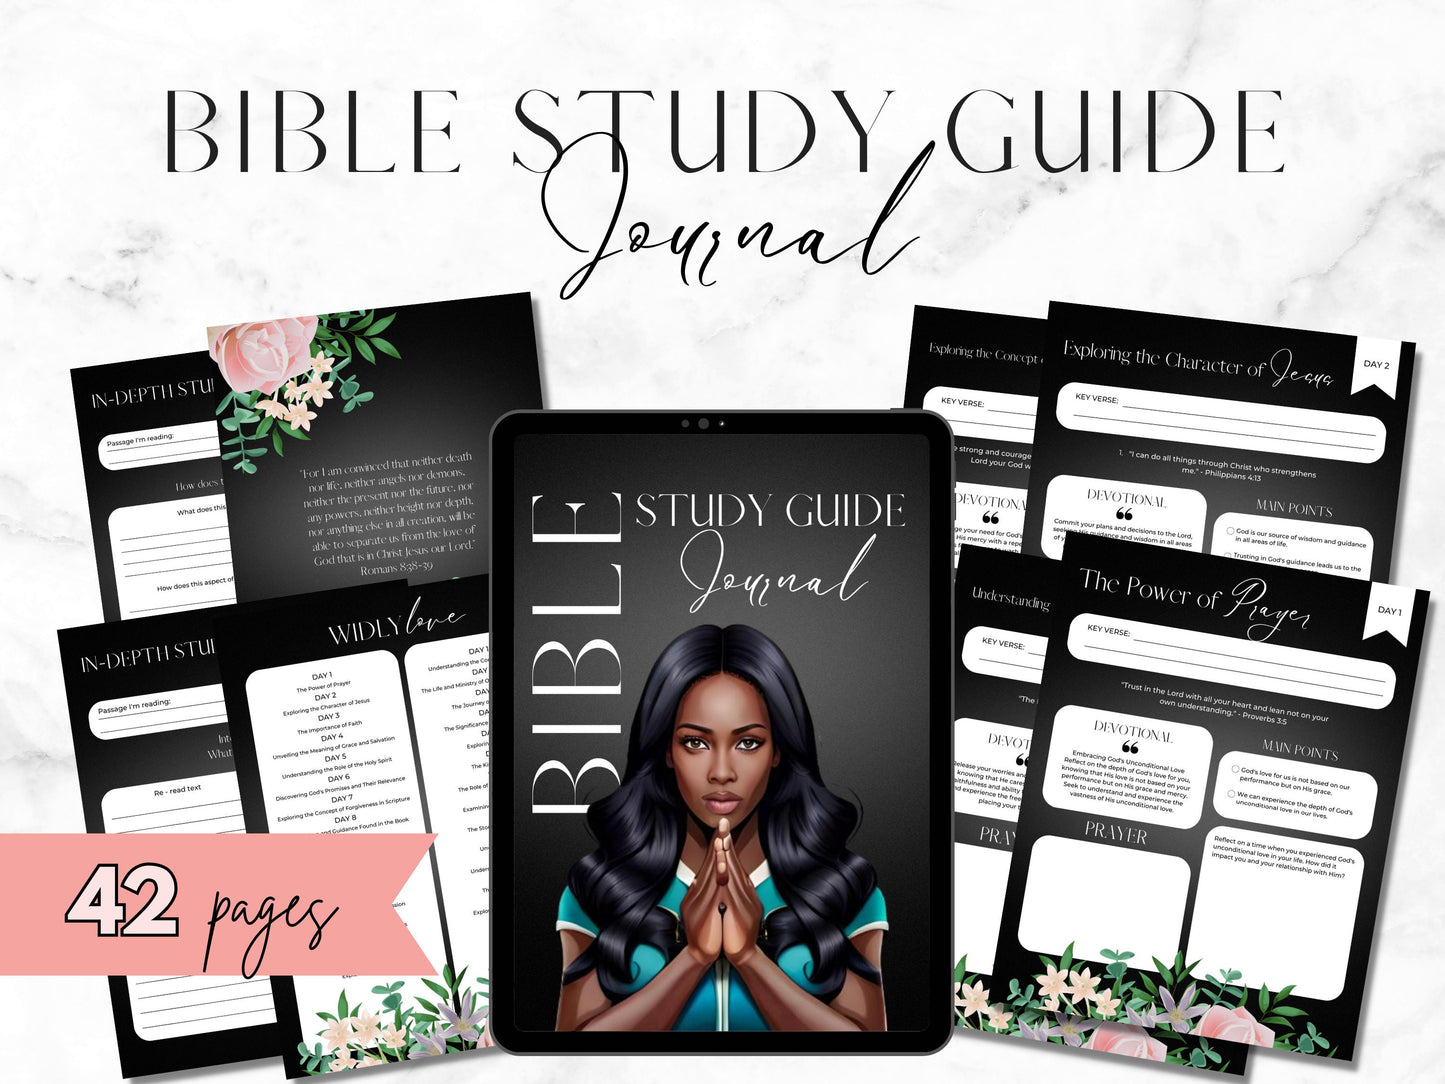 PLR Bible Study Guide Canva Journal Template para sa Kababaihan